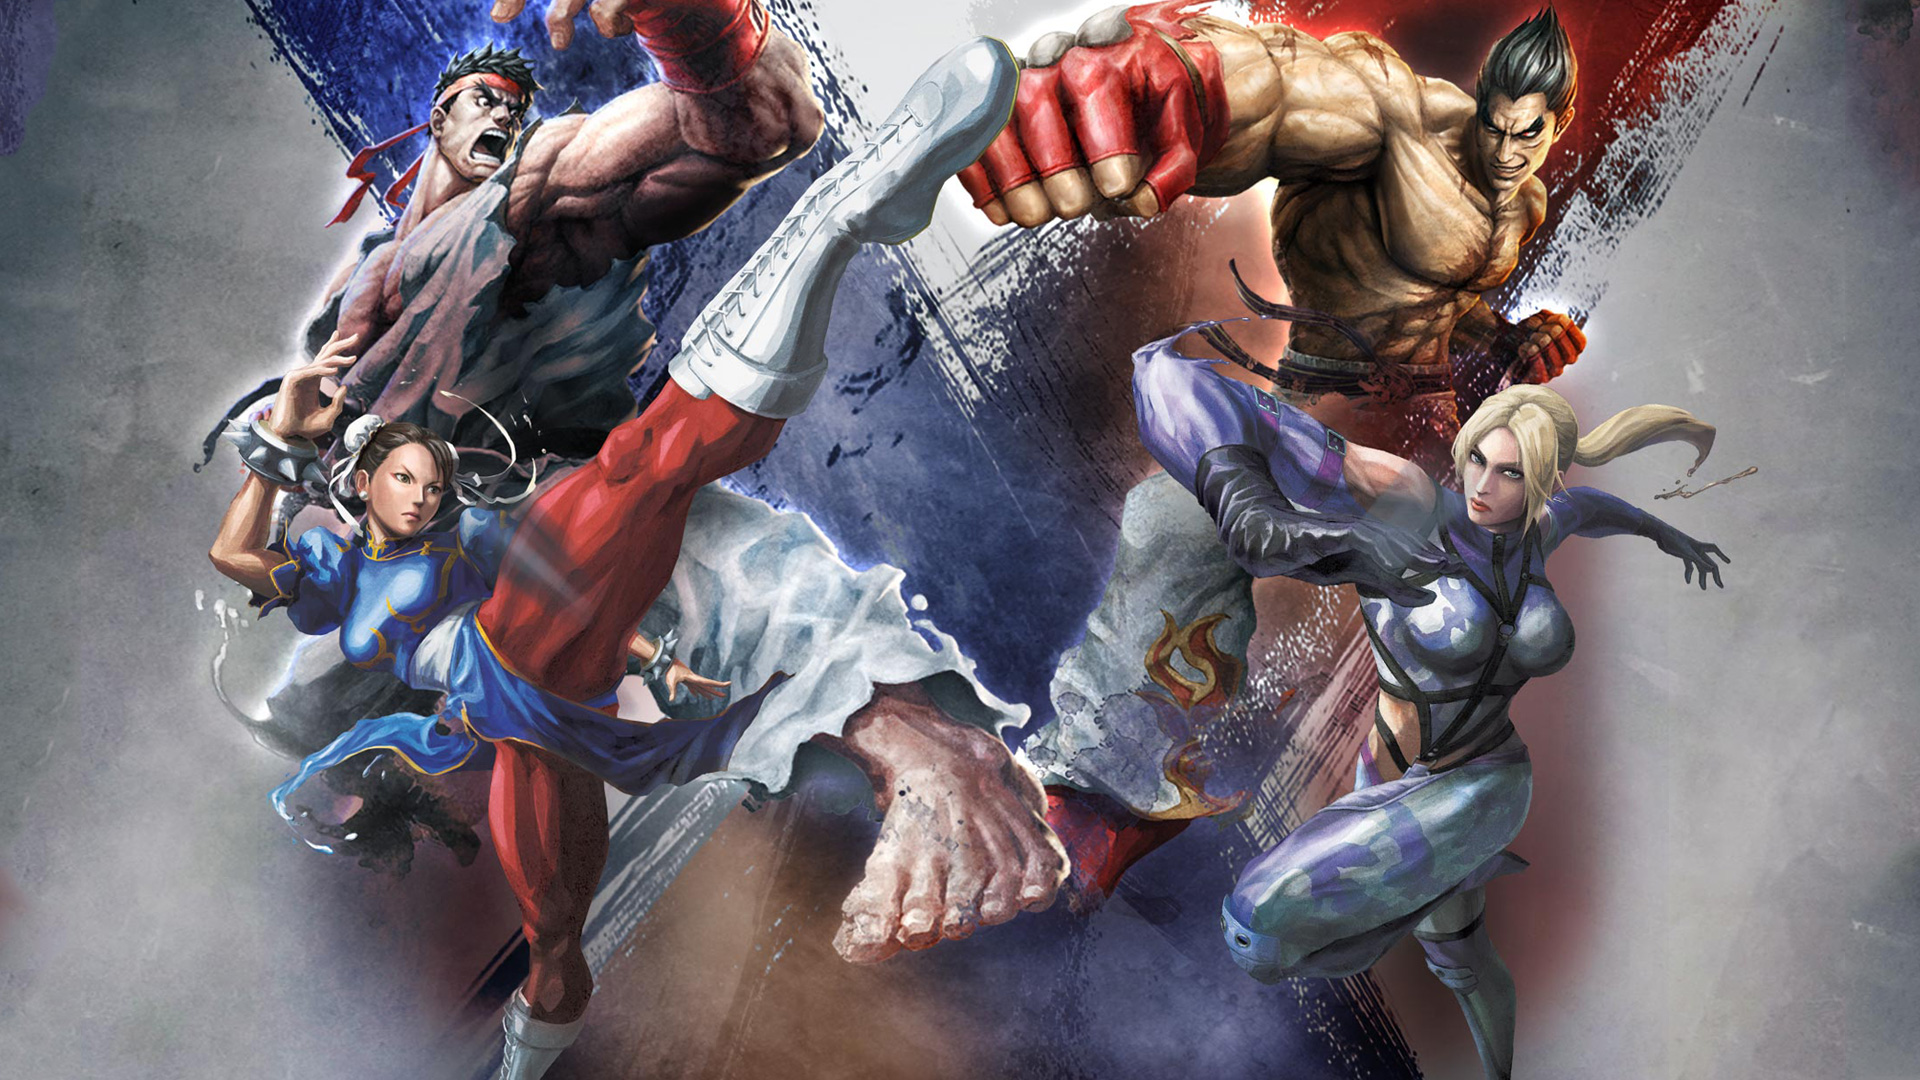 Street Fighter X Tekken Wallpaper HD Desktop